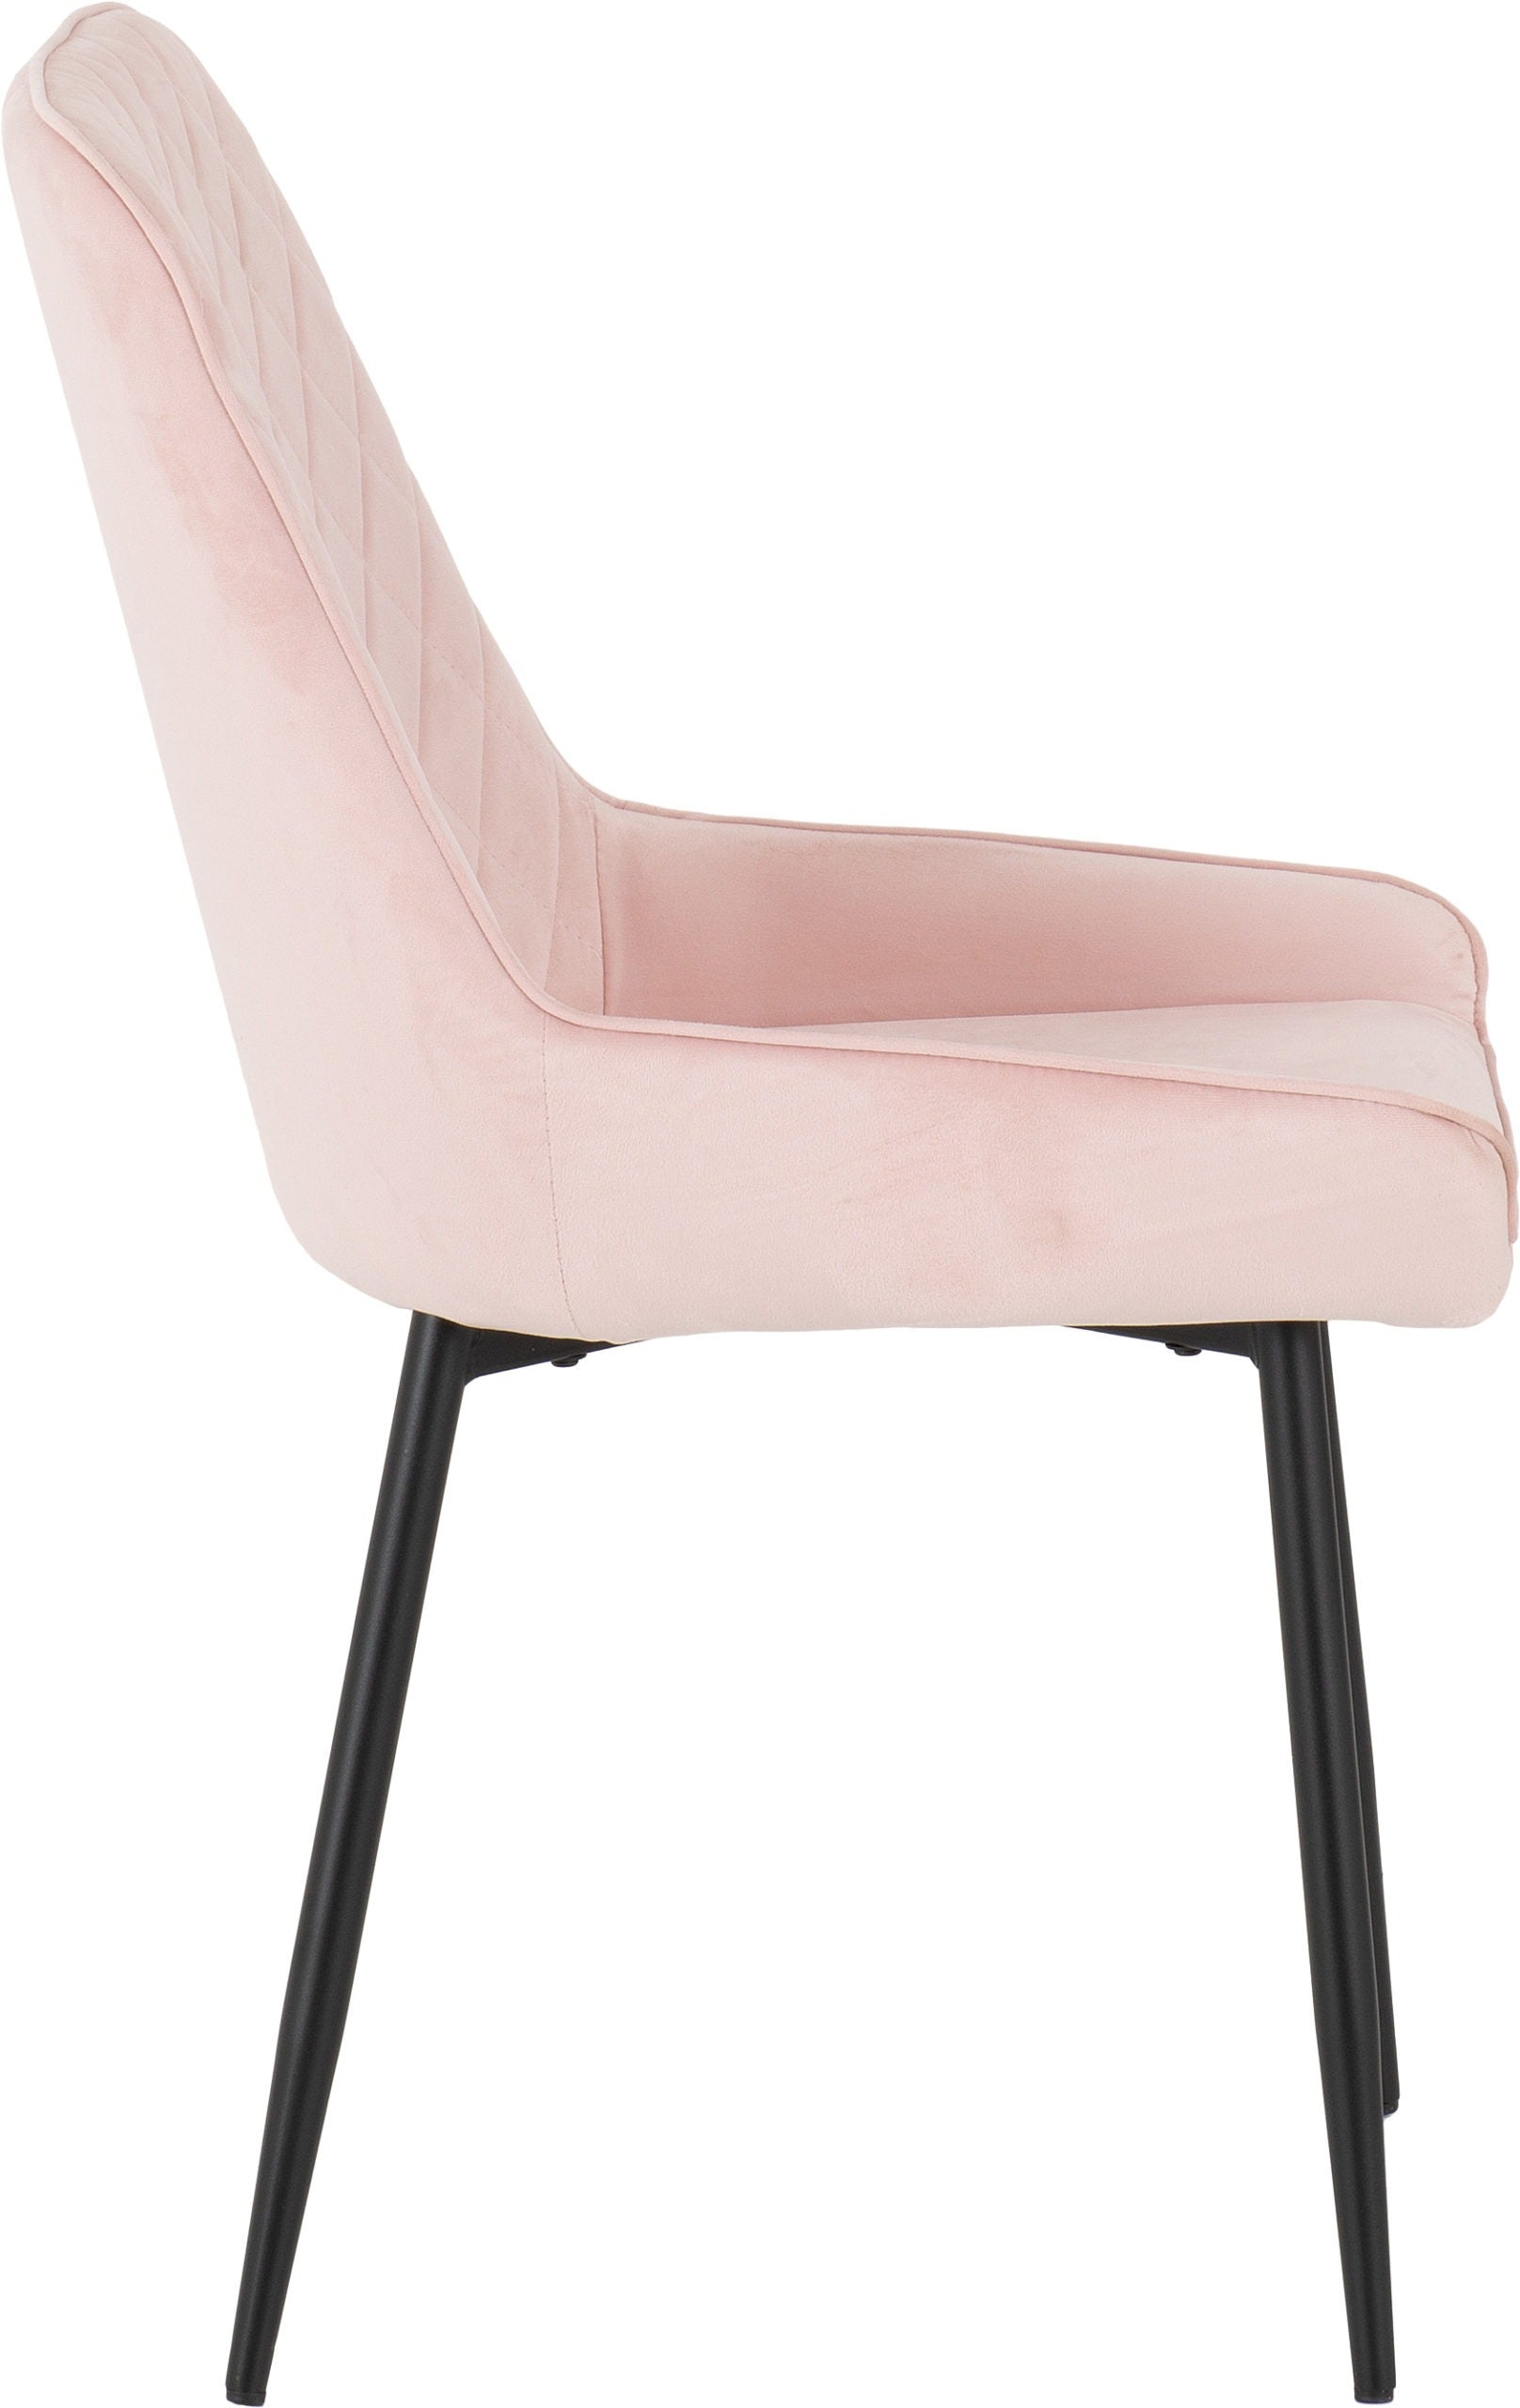 Avery Chair Pink Velvet- The Right Buy Store